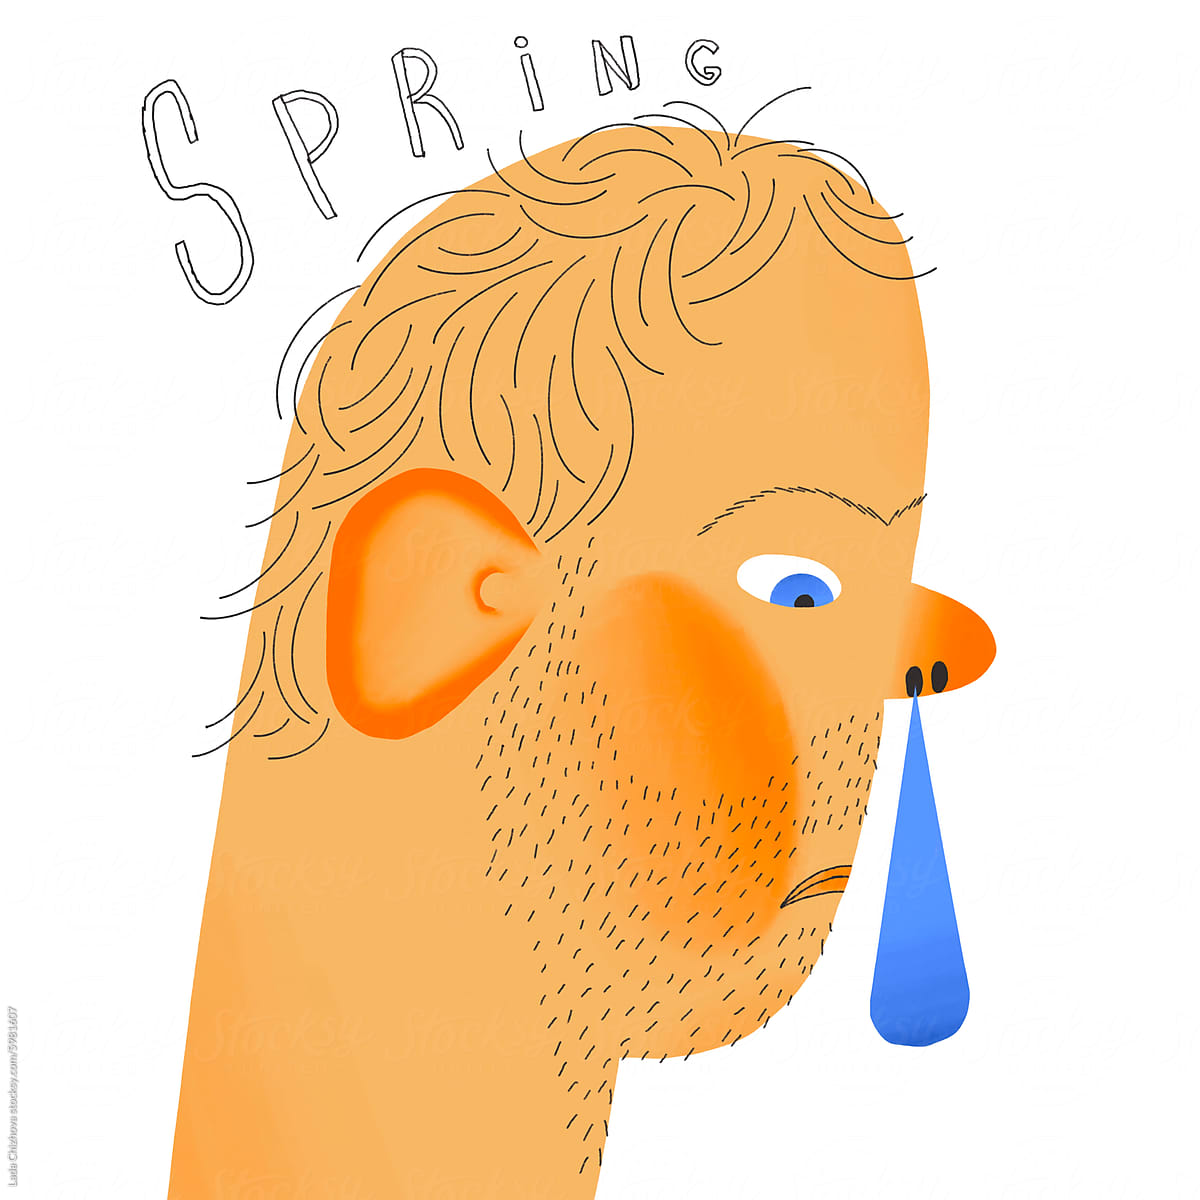 Sping Cold Spring flue Spring snot